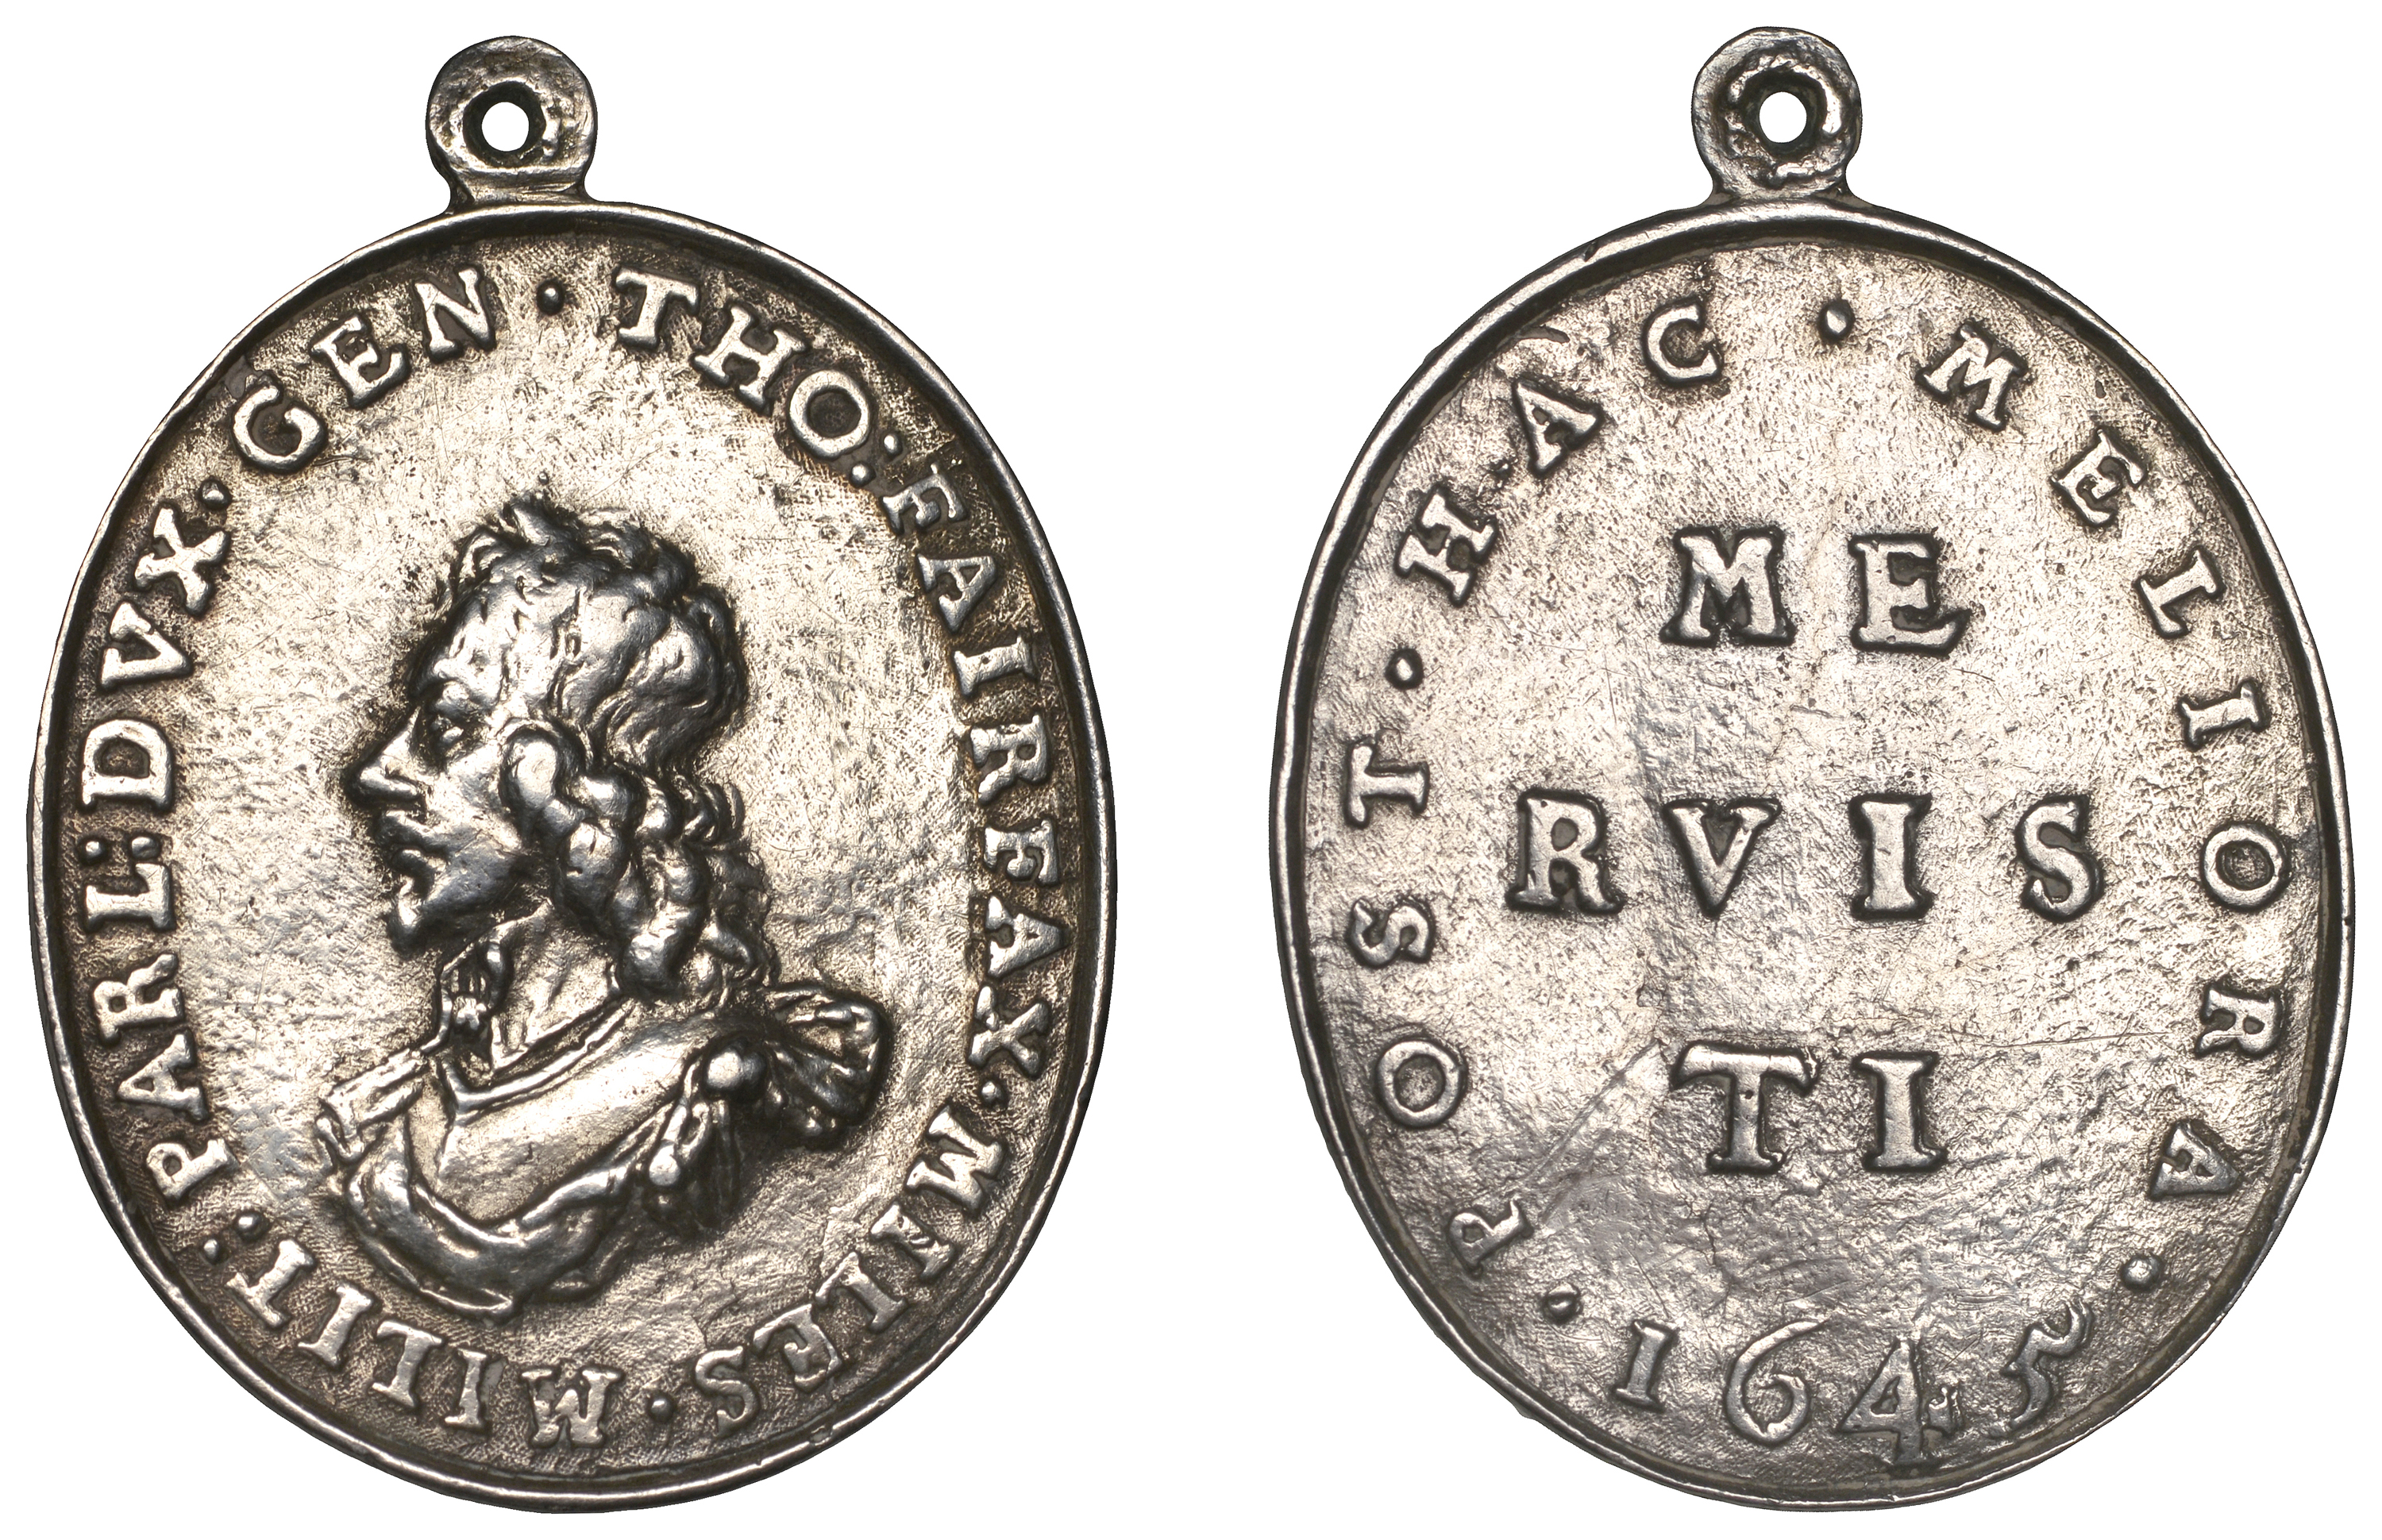 Sir Thomas Fairfax, 1645, a cast oval silver badge, unsigned [by T. Simon], armoured bust le...